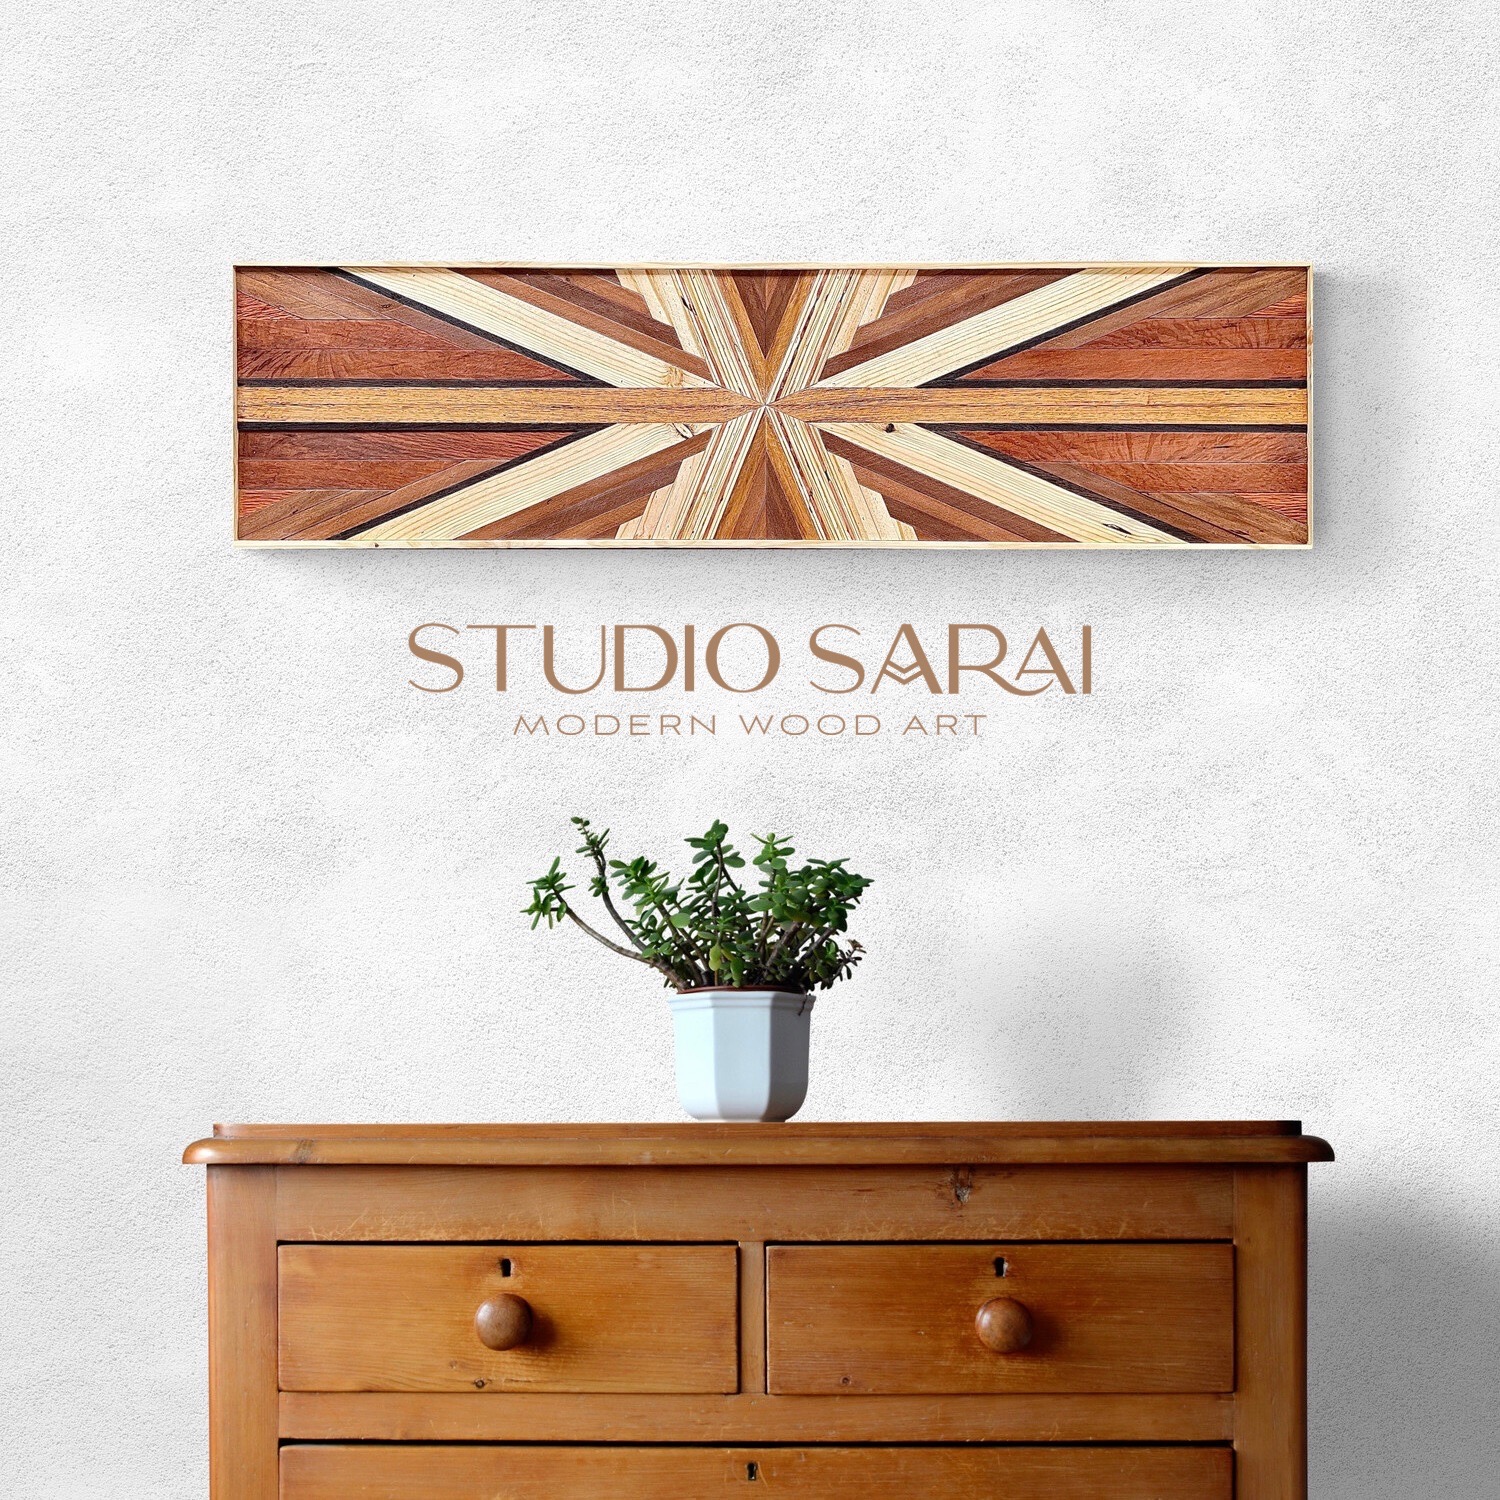 Shop Wooden Wall Art Online at Studio Sarai